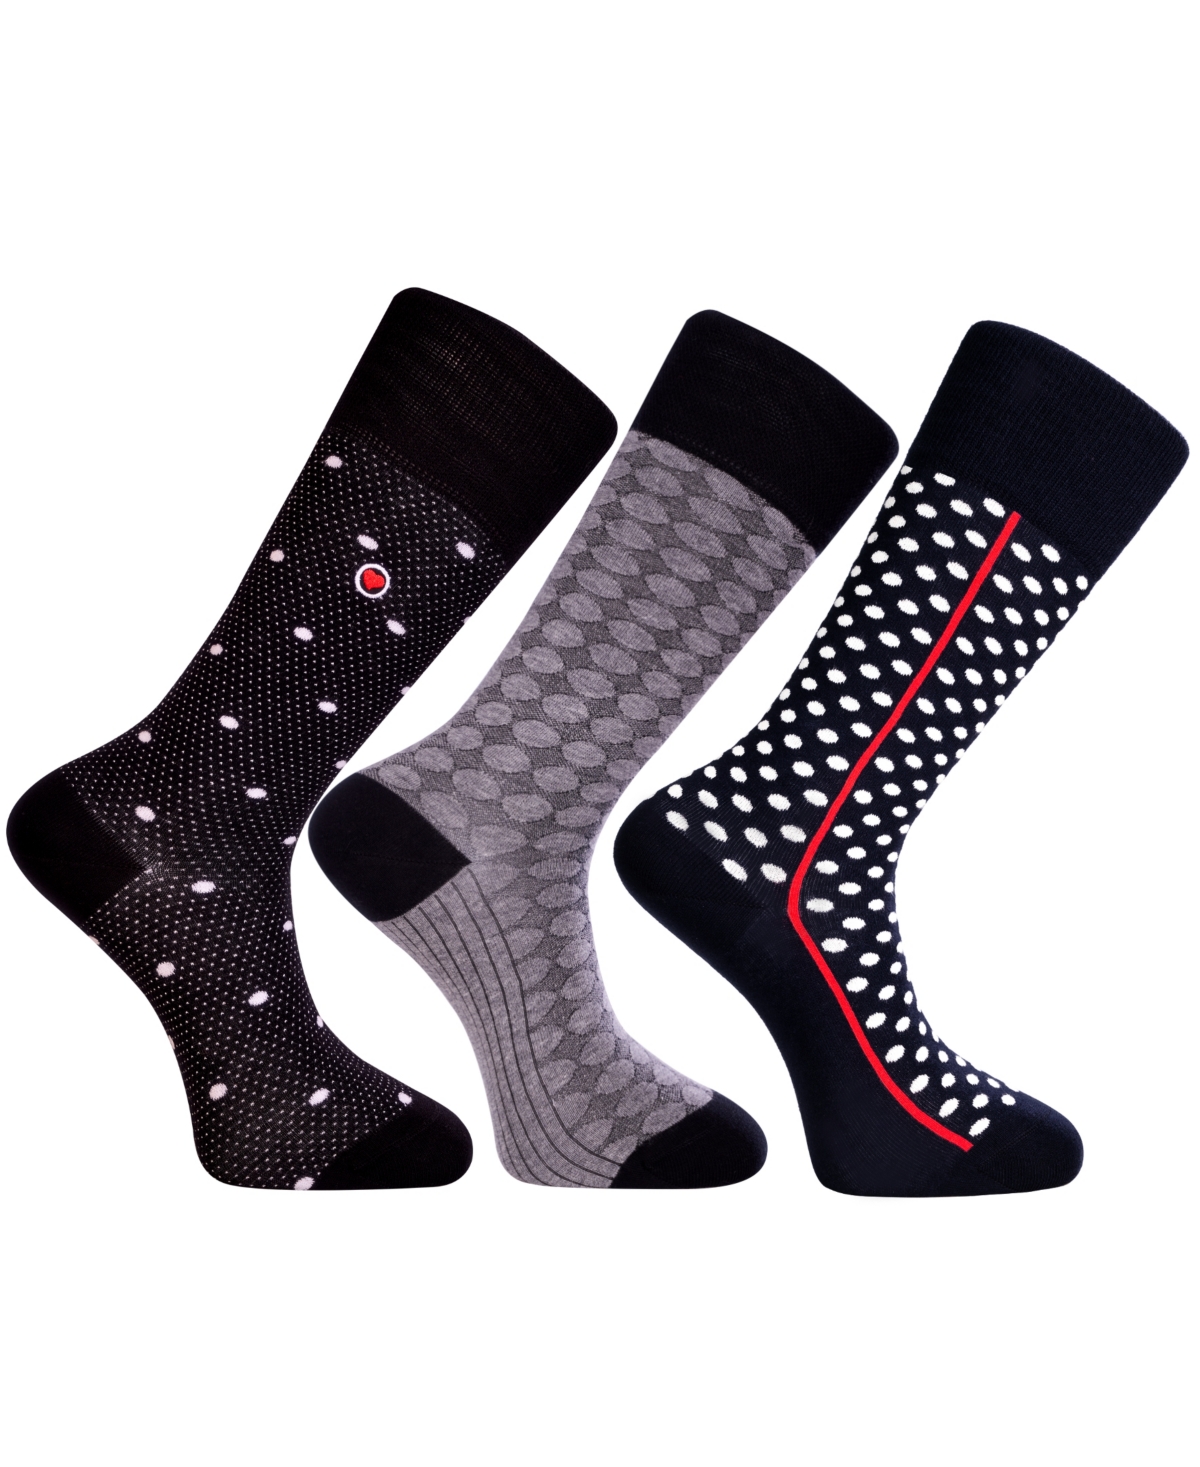 Men's Detroit Bundle Luxury Mid-Calf Dress Socks with Seamless Toe Design, Pack of 3 - Multi Color